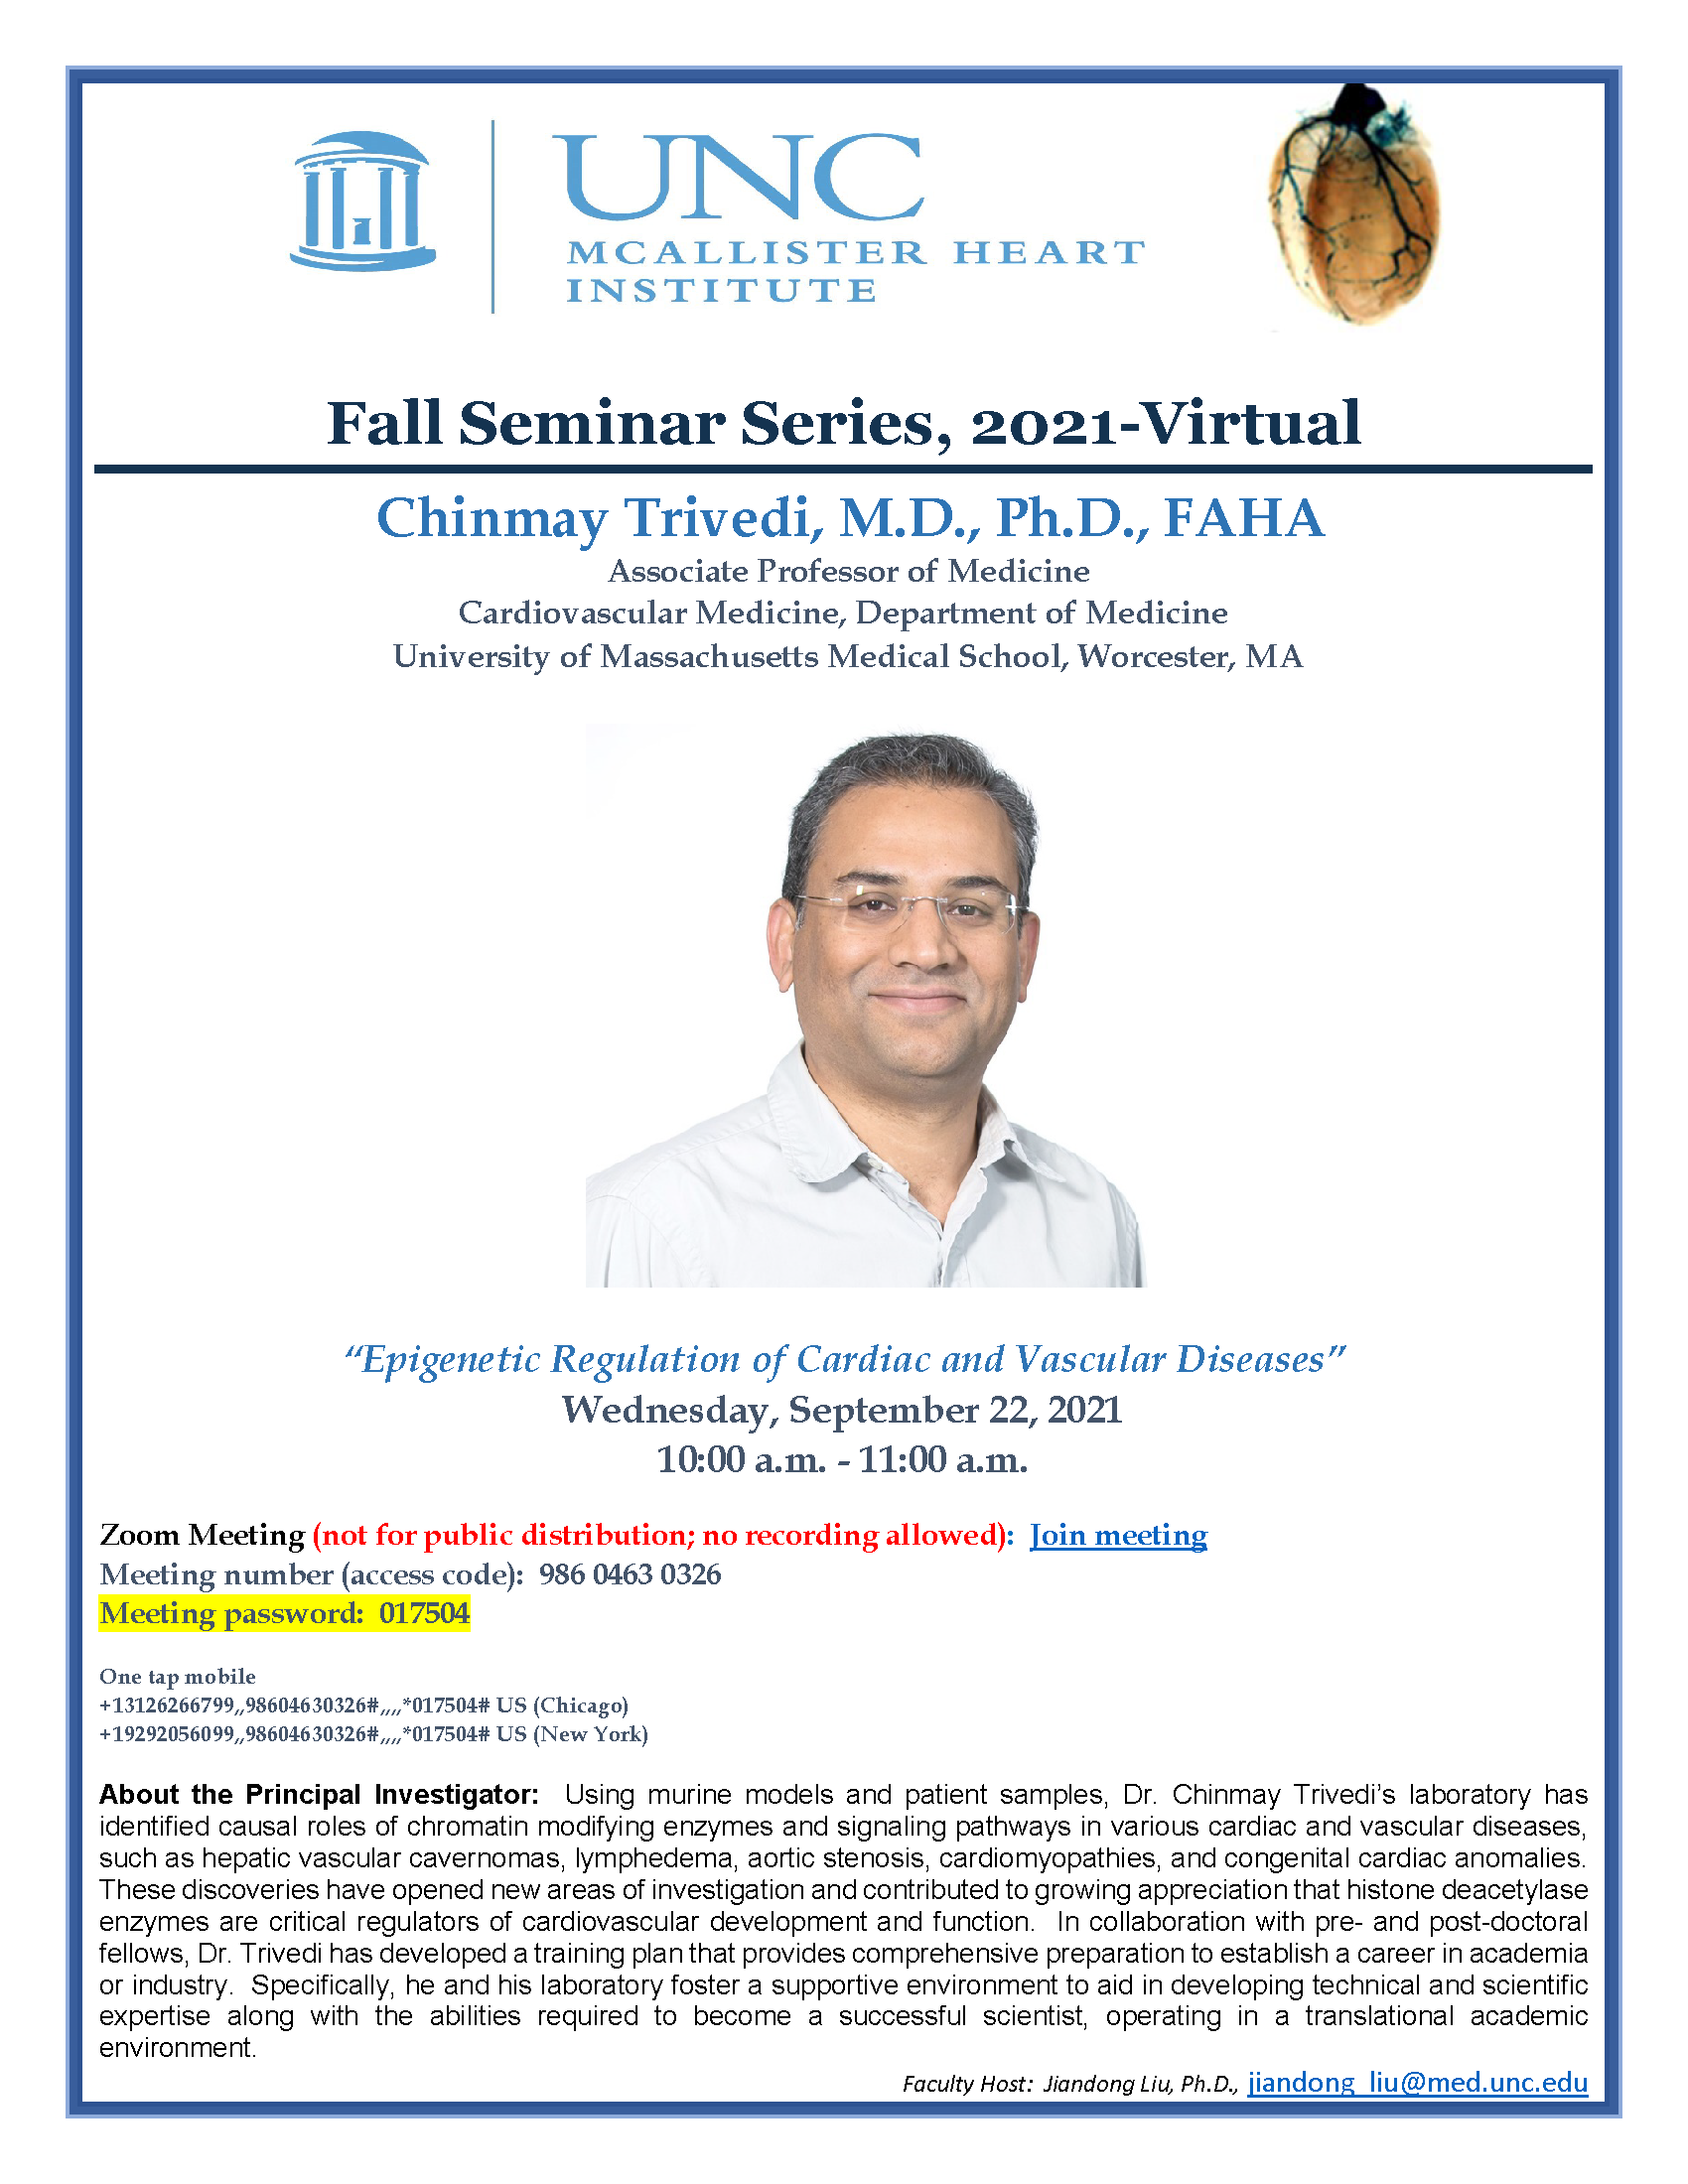 Chinmay Trivedi, M.D., Ph.D., FAHA